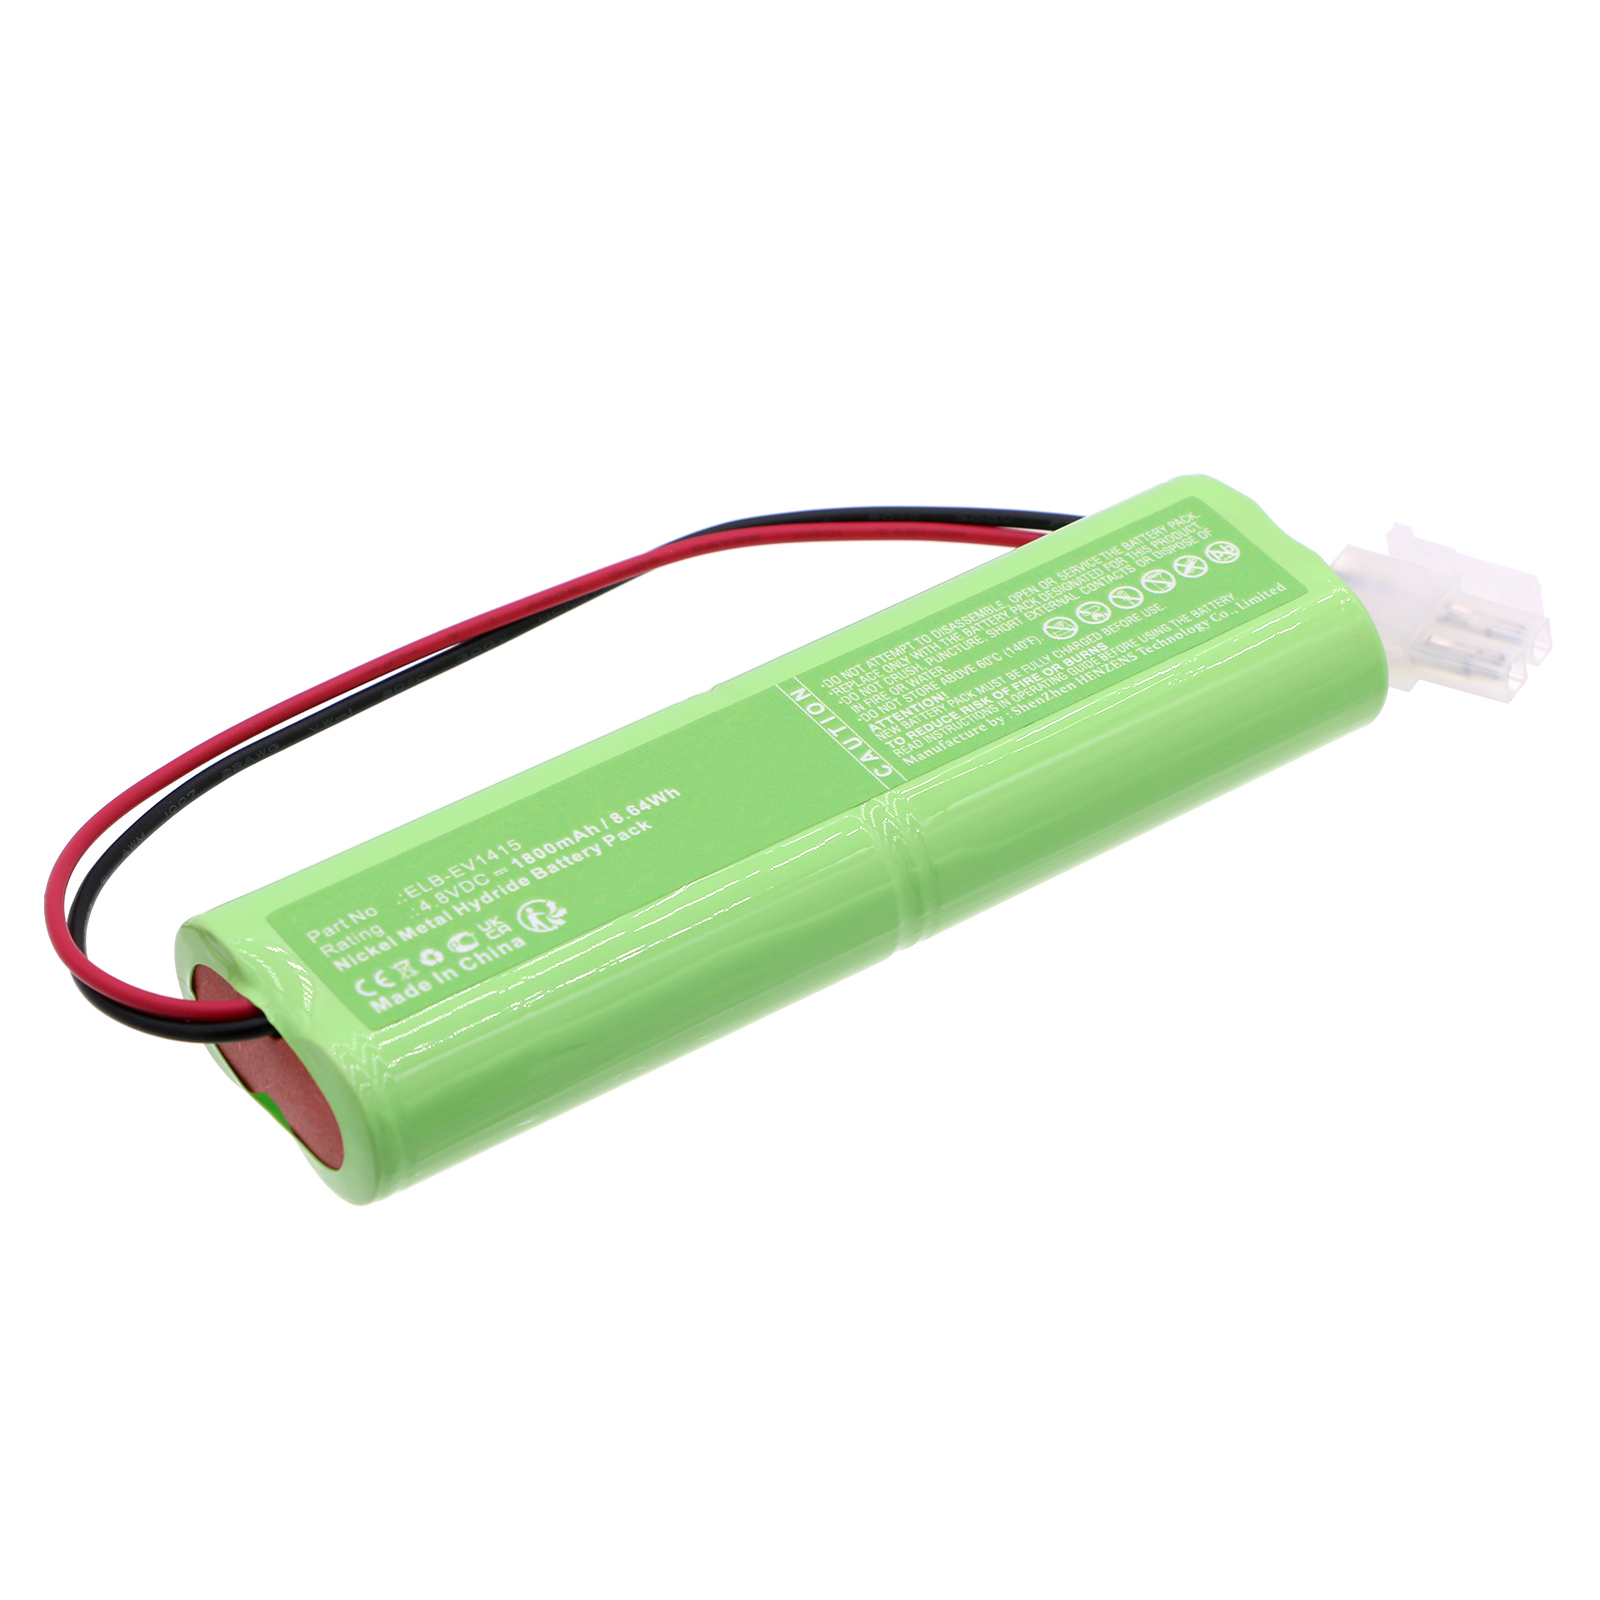 Synergy Digital Emergency Lighting Battery, Compatible with Ektor ELB-EV1415 Emergency Lighting Battery (Ni-MH, 4.8V, 1800mAh)